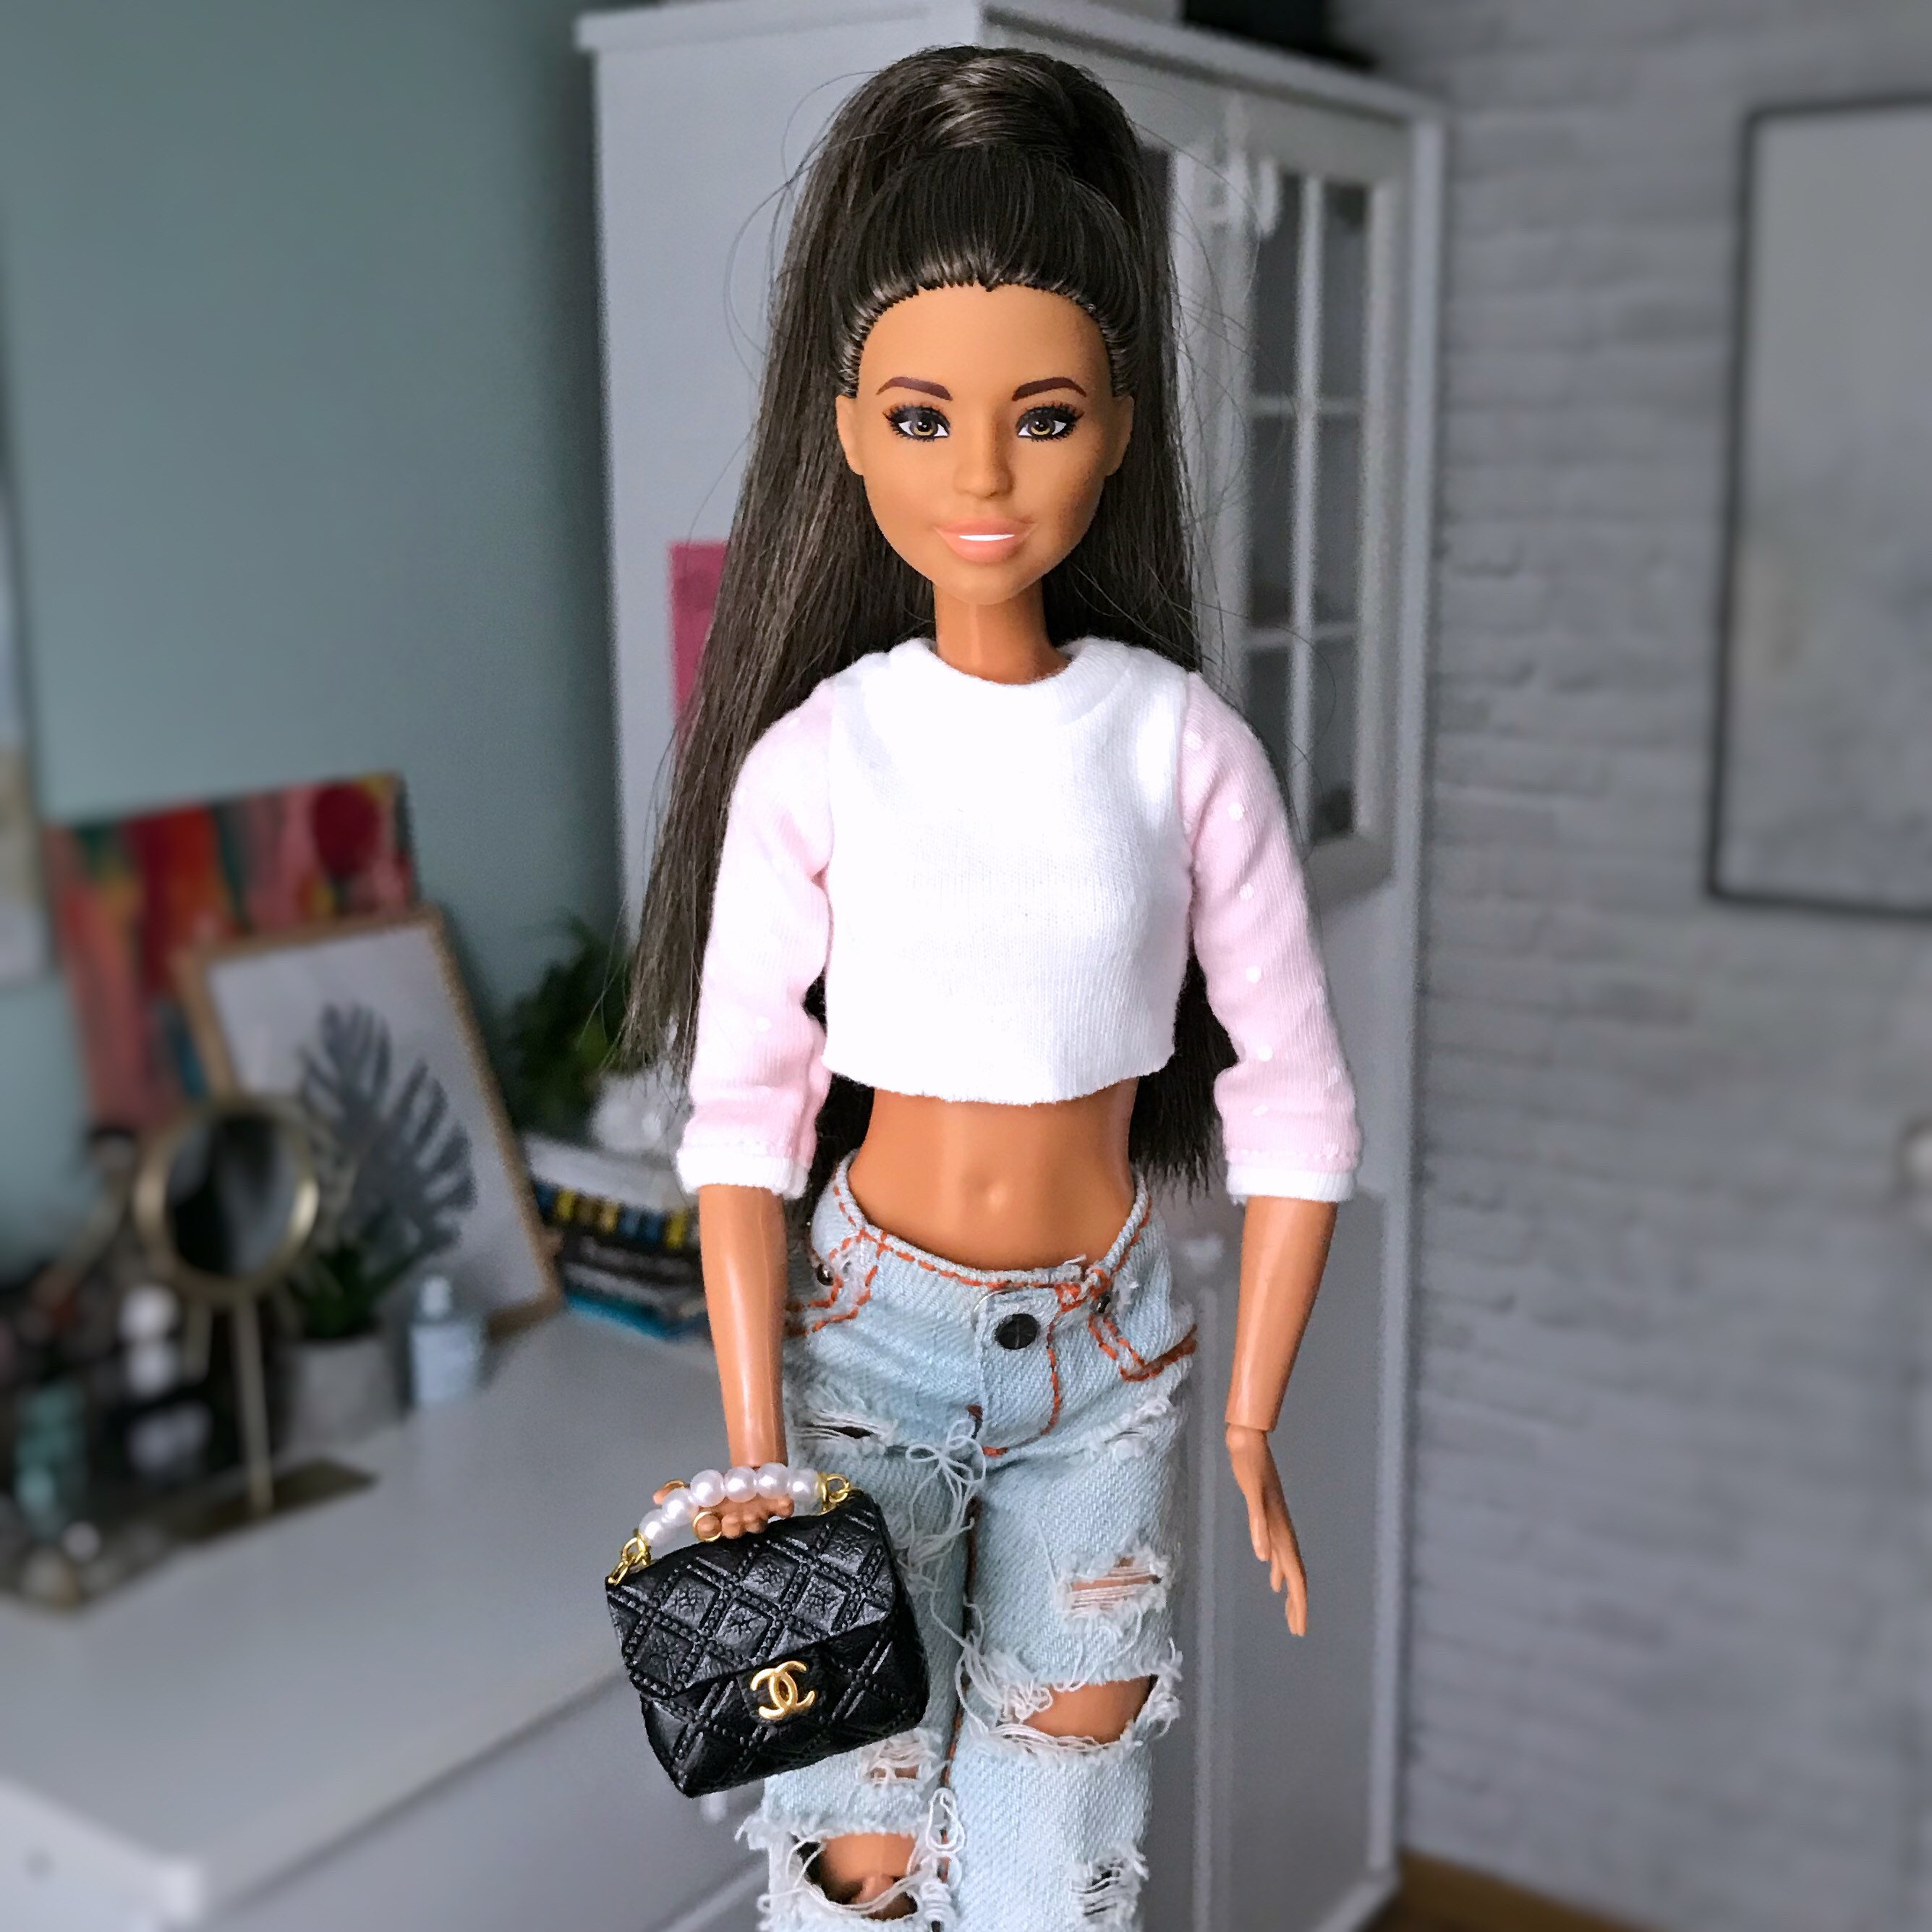 Miniature Doll Bag Doll Handbag for 1:6 Scale BJD Barbie FR2 